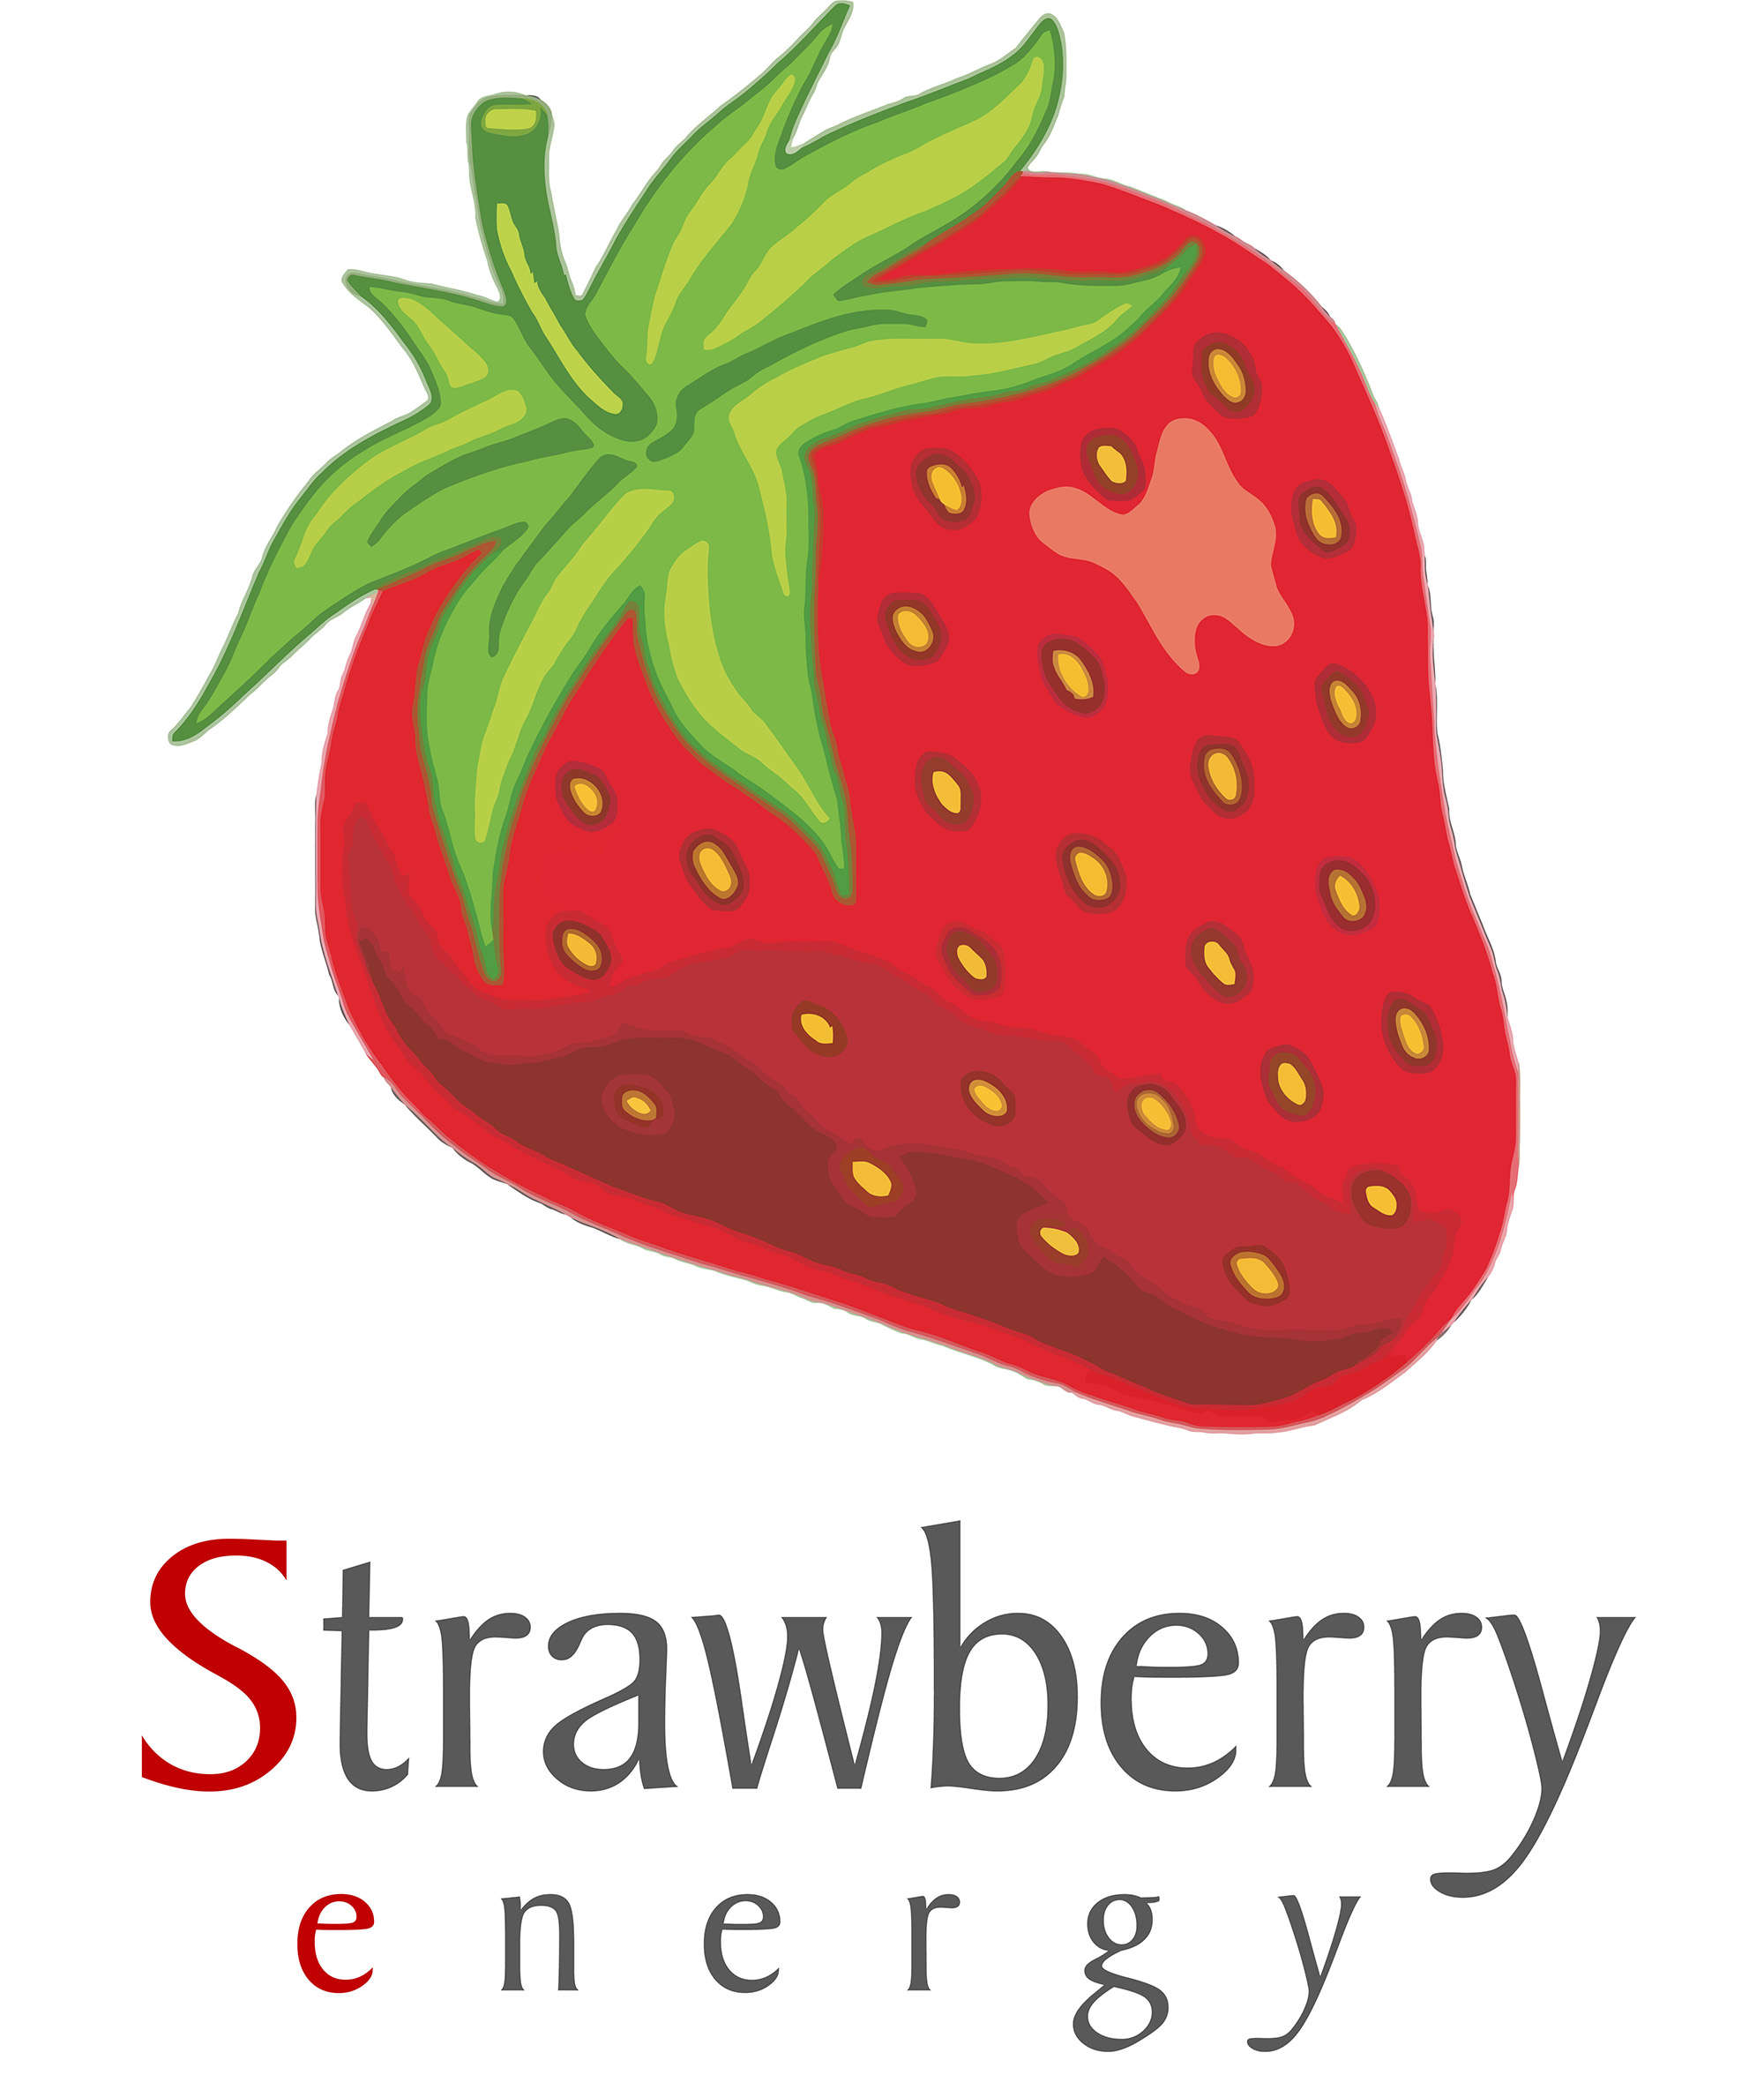 Strawberry energy - Crunchbase Company Profile & Funding